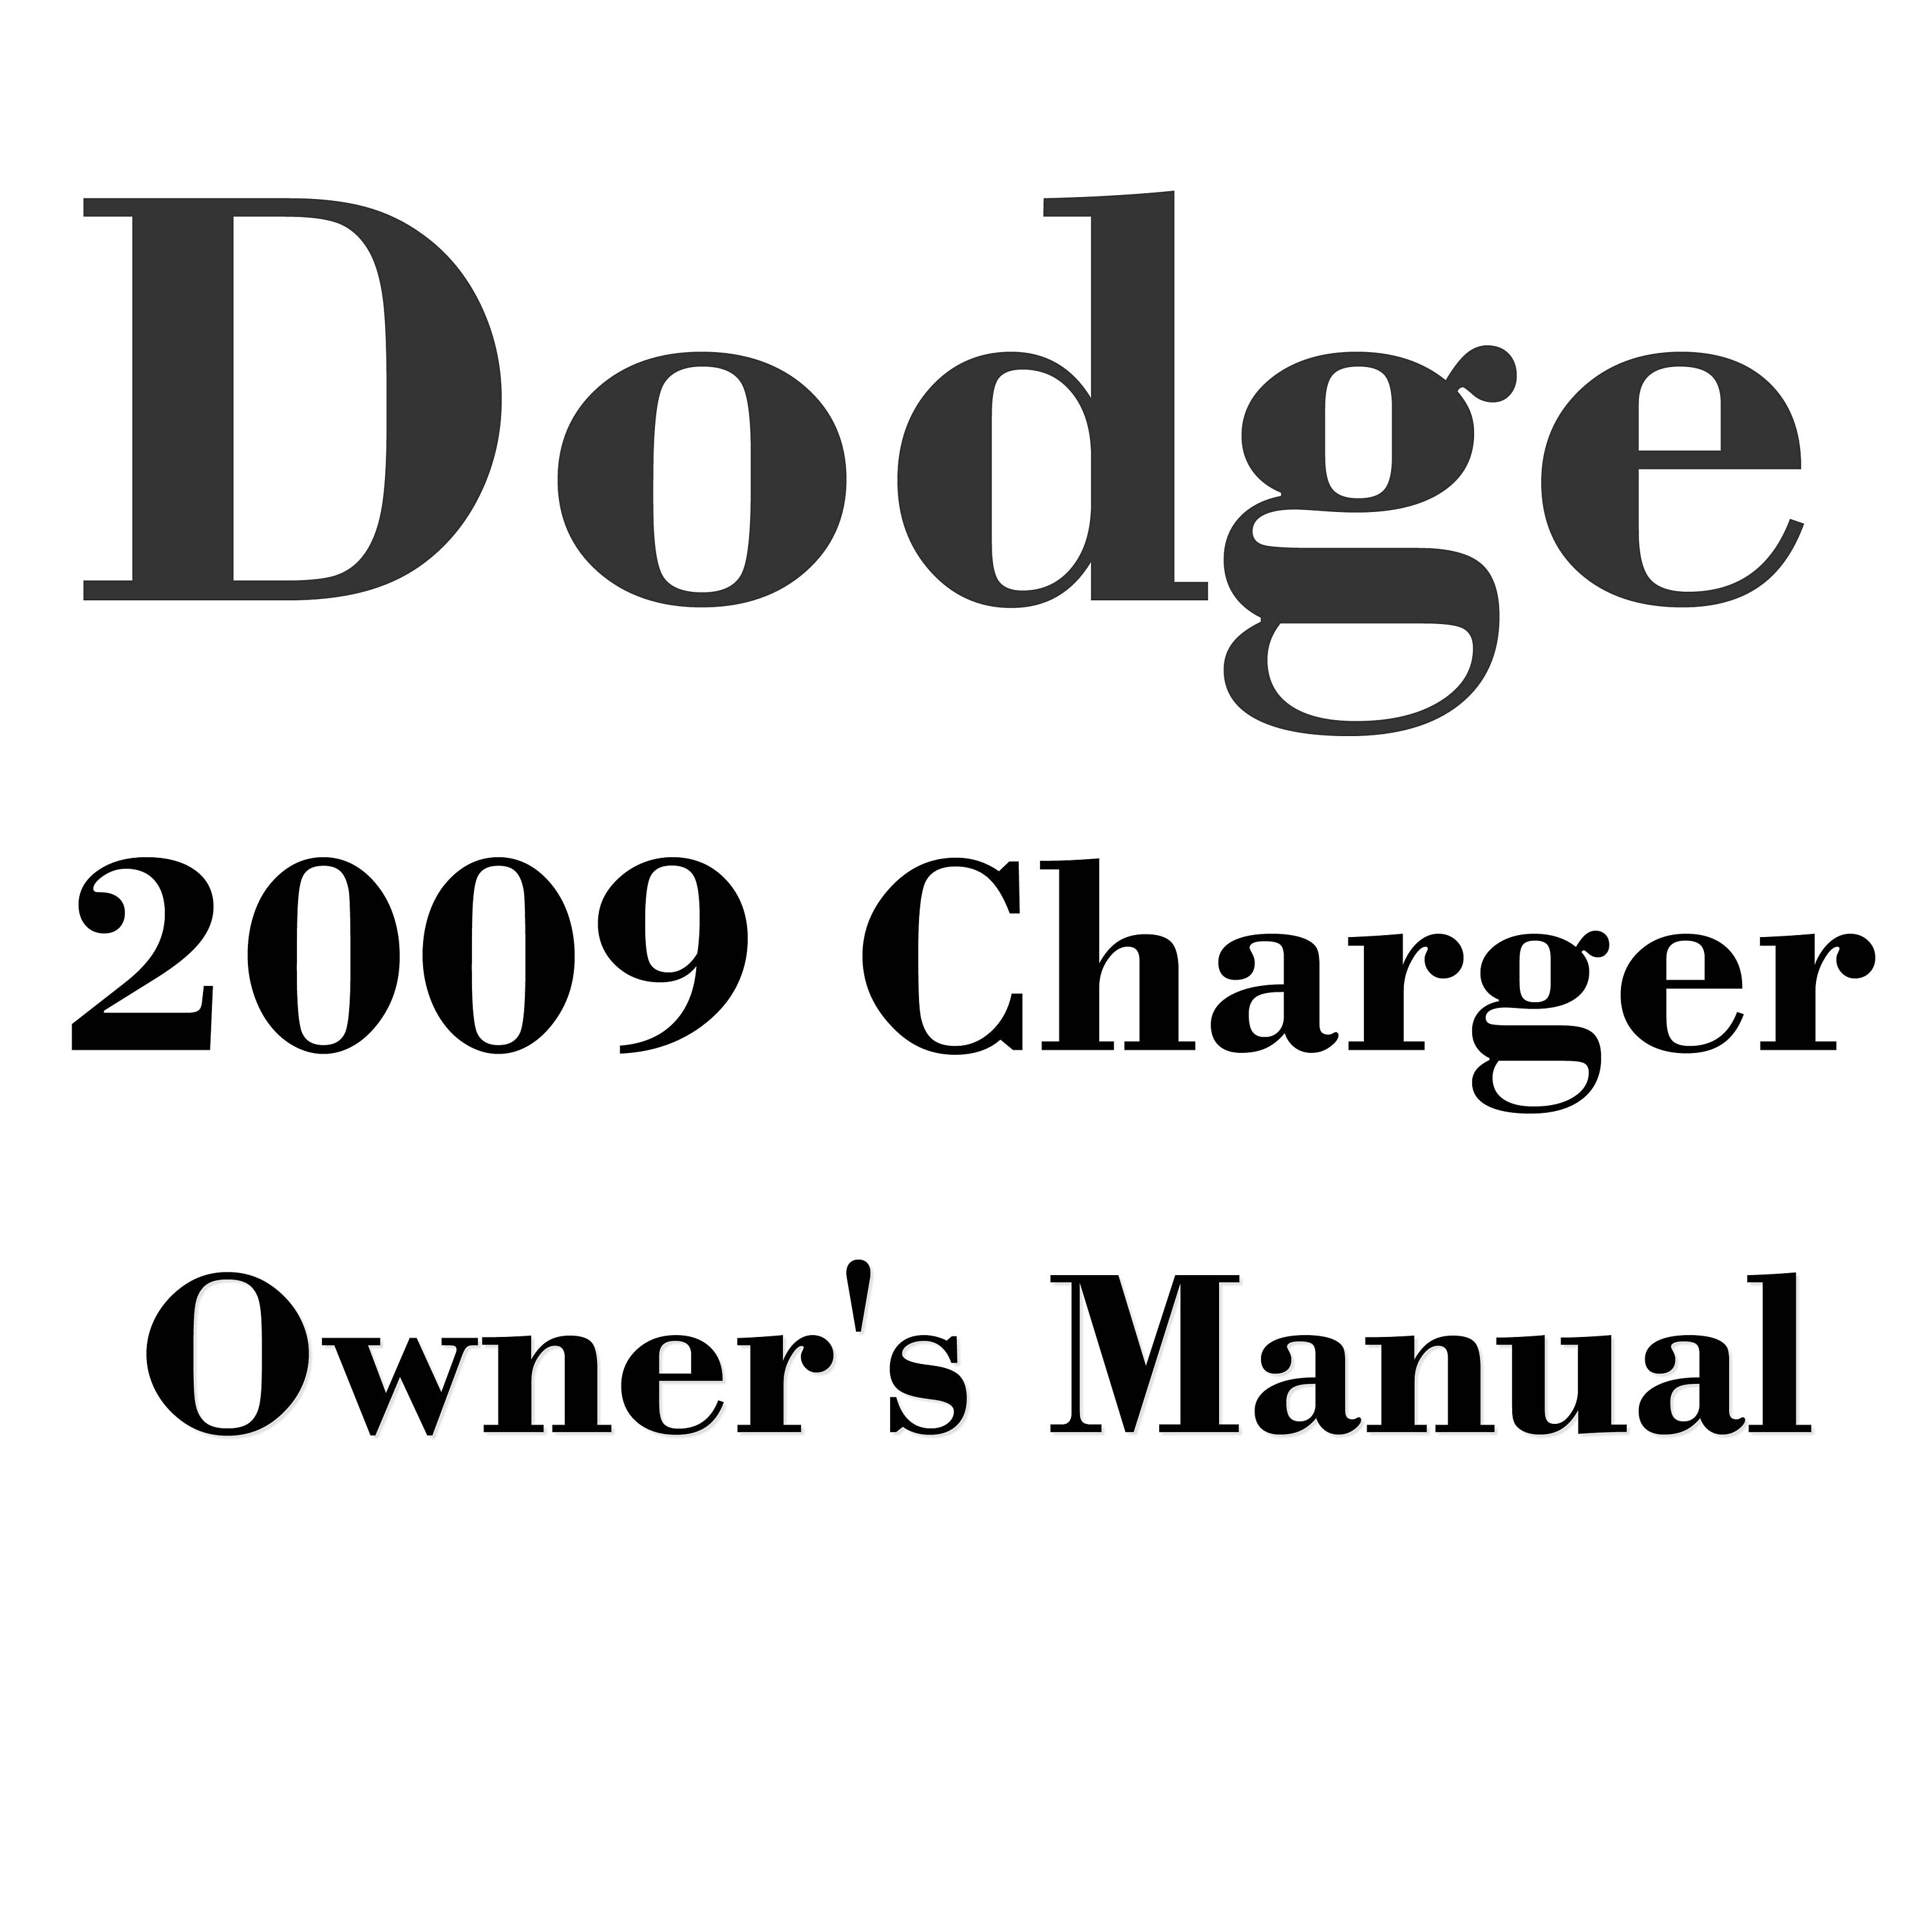 2009 Dodge Charger Owners Manual PDF Digital Download - Etsy Australia